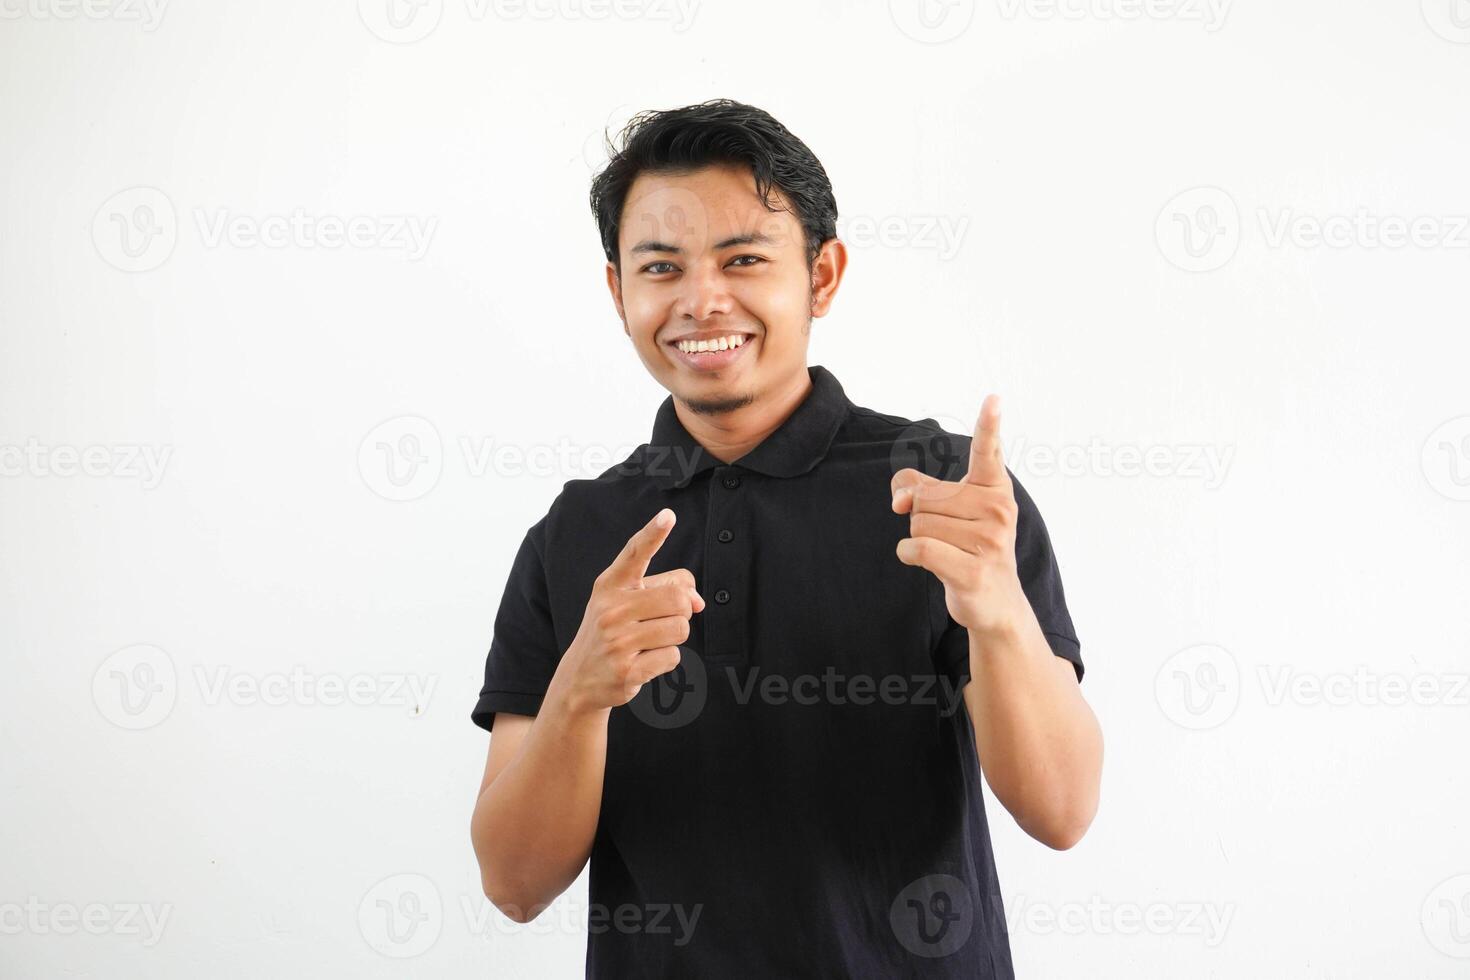 jong Aziatisch Mens glimlachen en richten naar camera vervelend zwart polo t overhemd geïsoleerd Aan wit achtergrond. foto